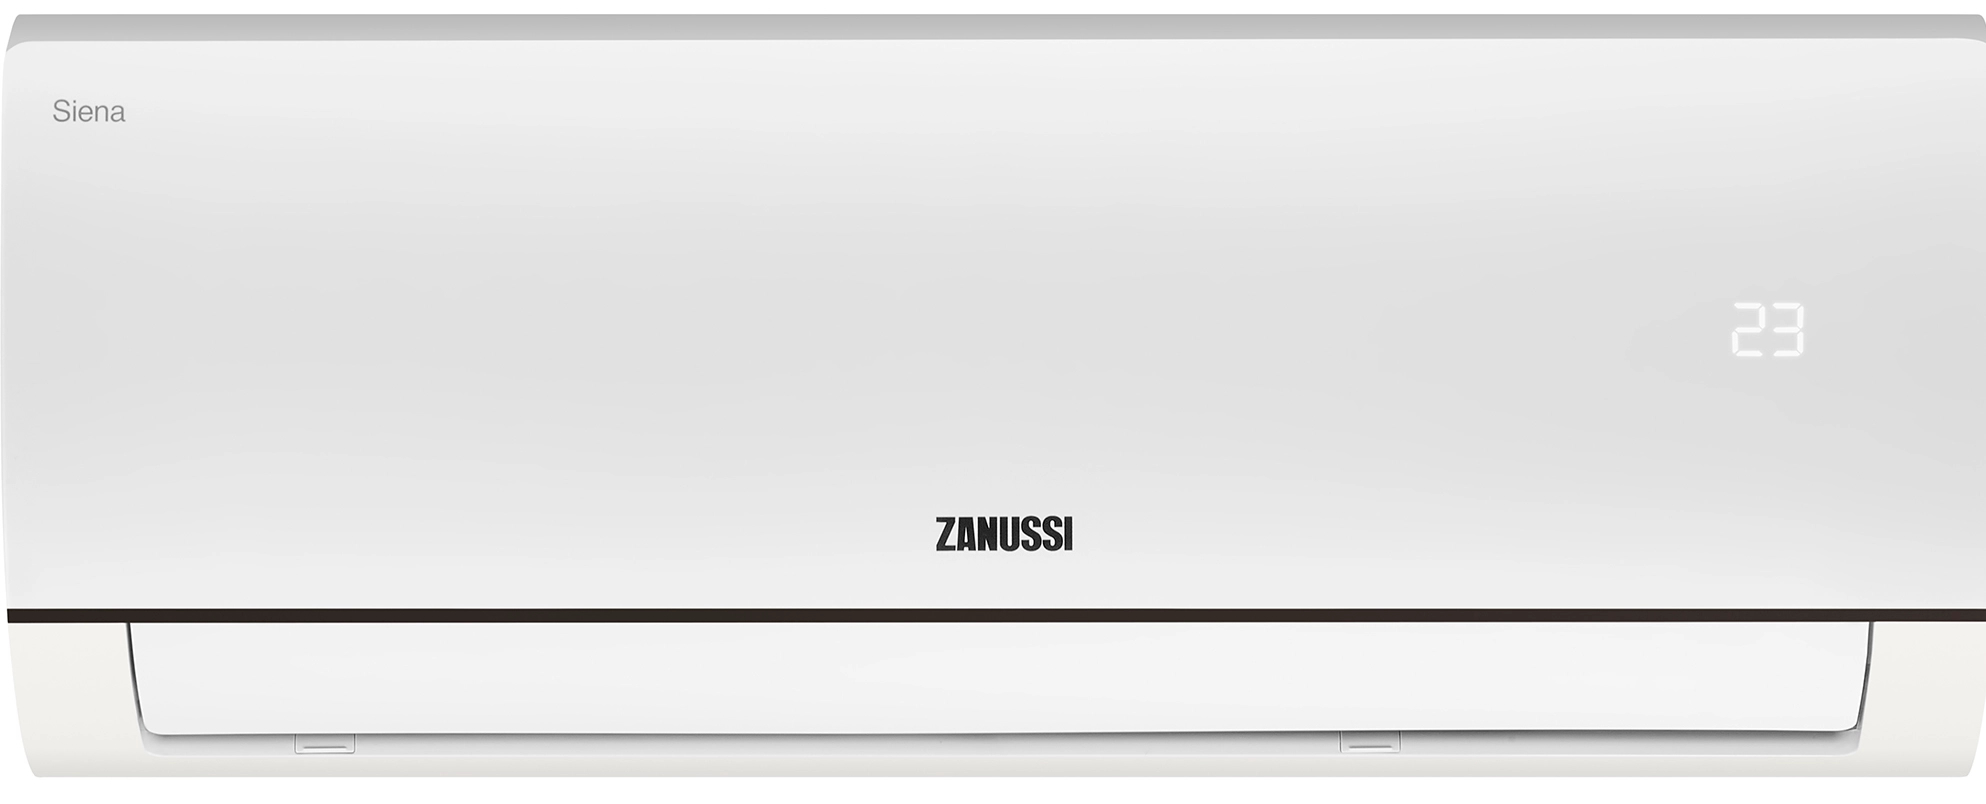 продаём Zanussi Siena ZACS-12 HS/A21/N1 в Украине - фото 4